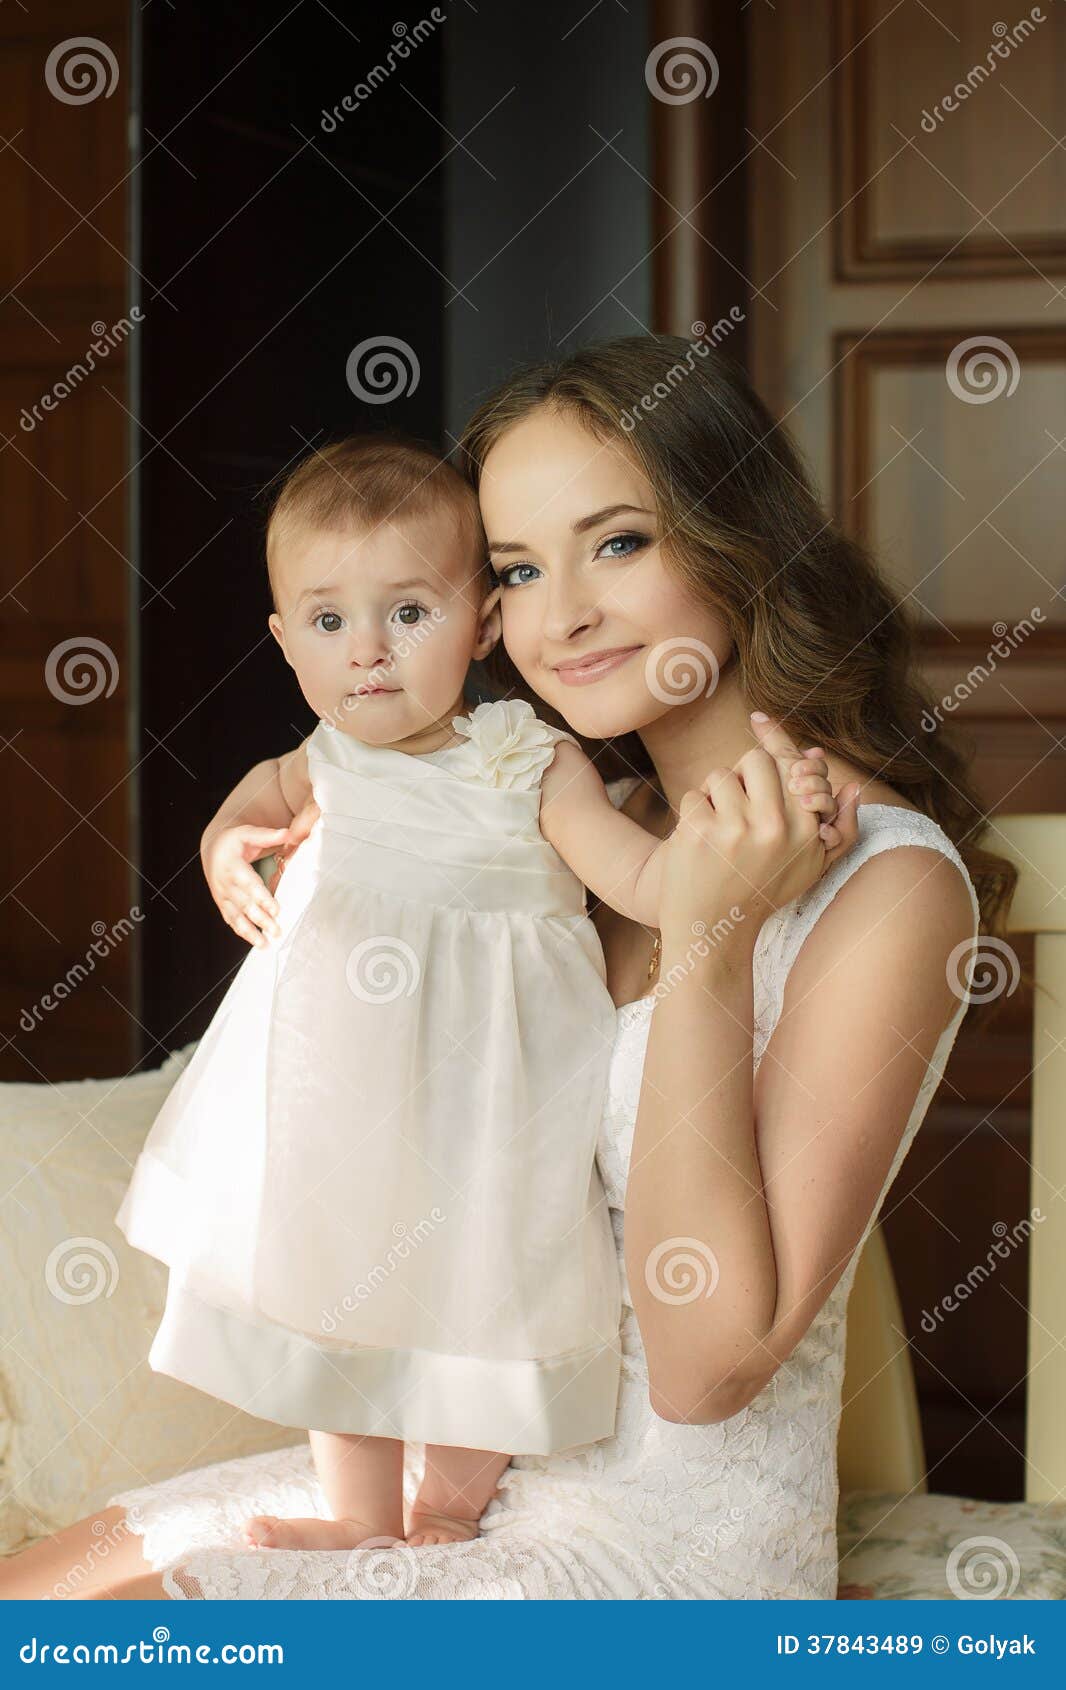 baby girl and mom dress